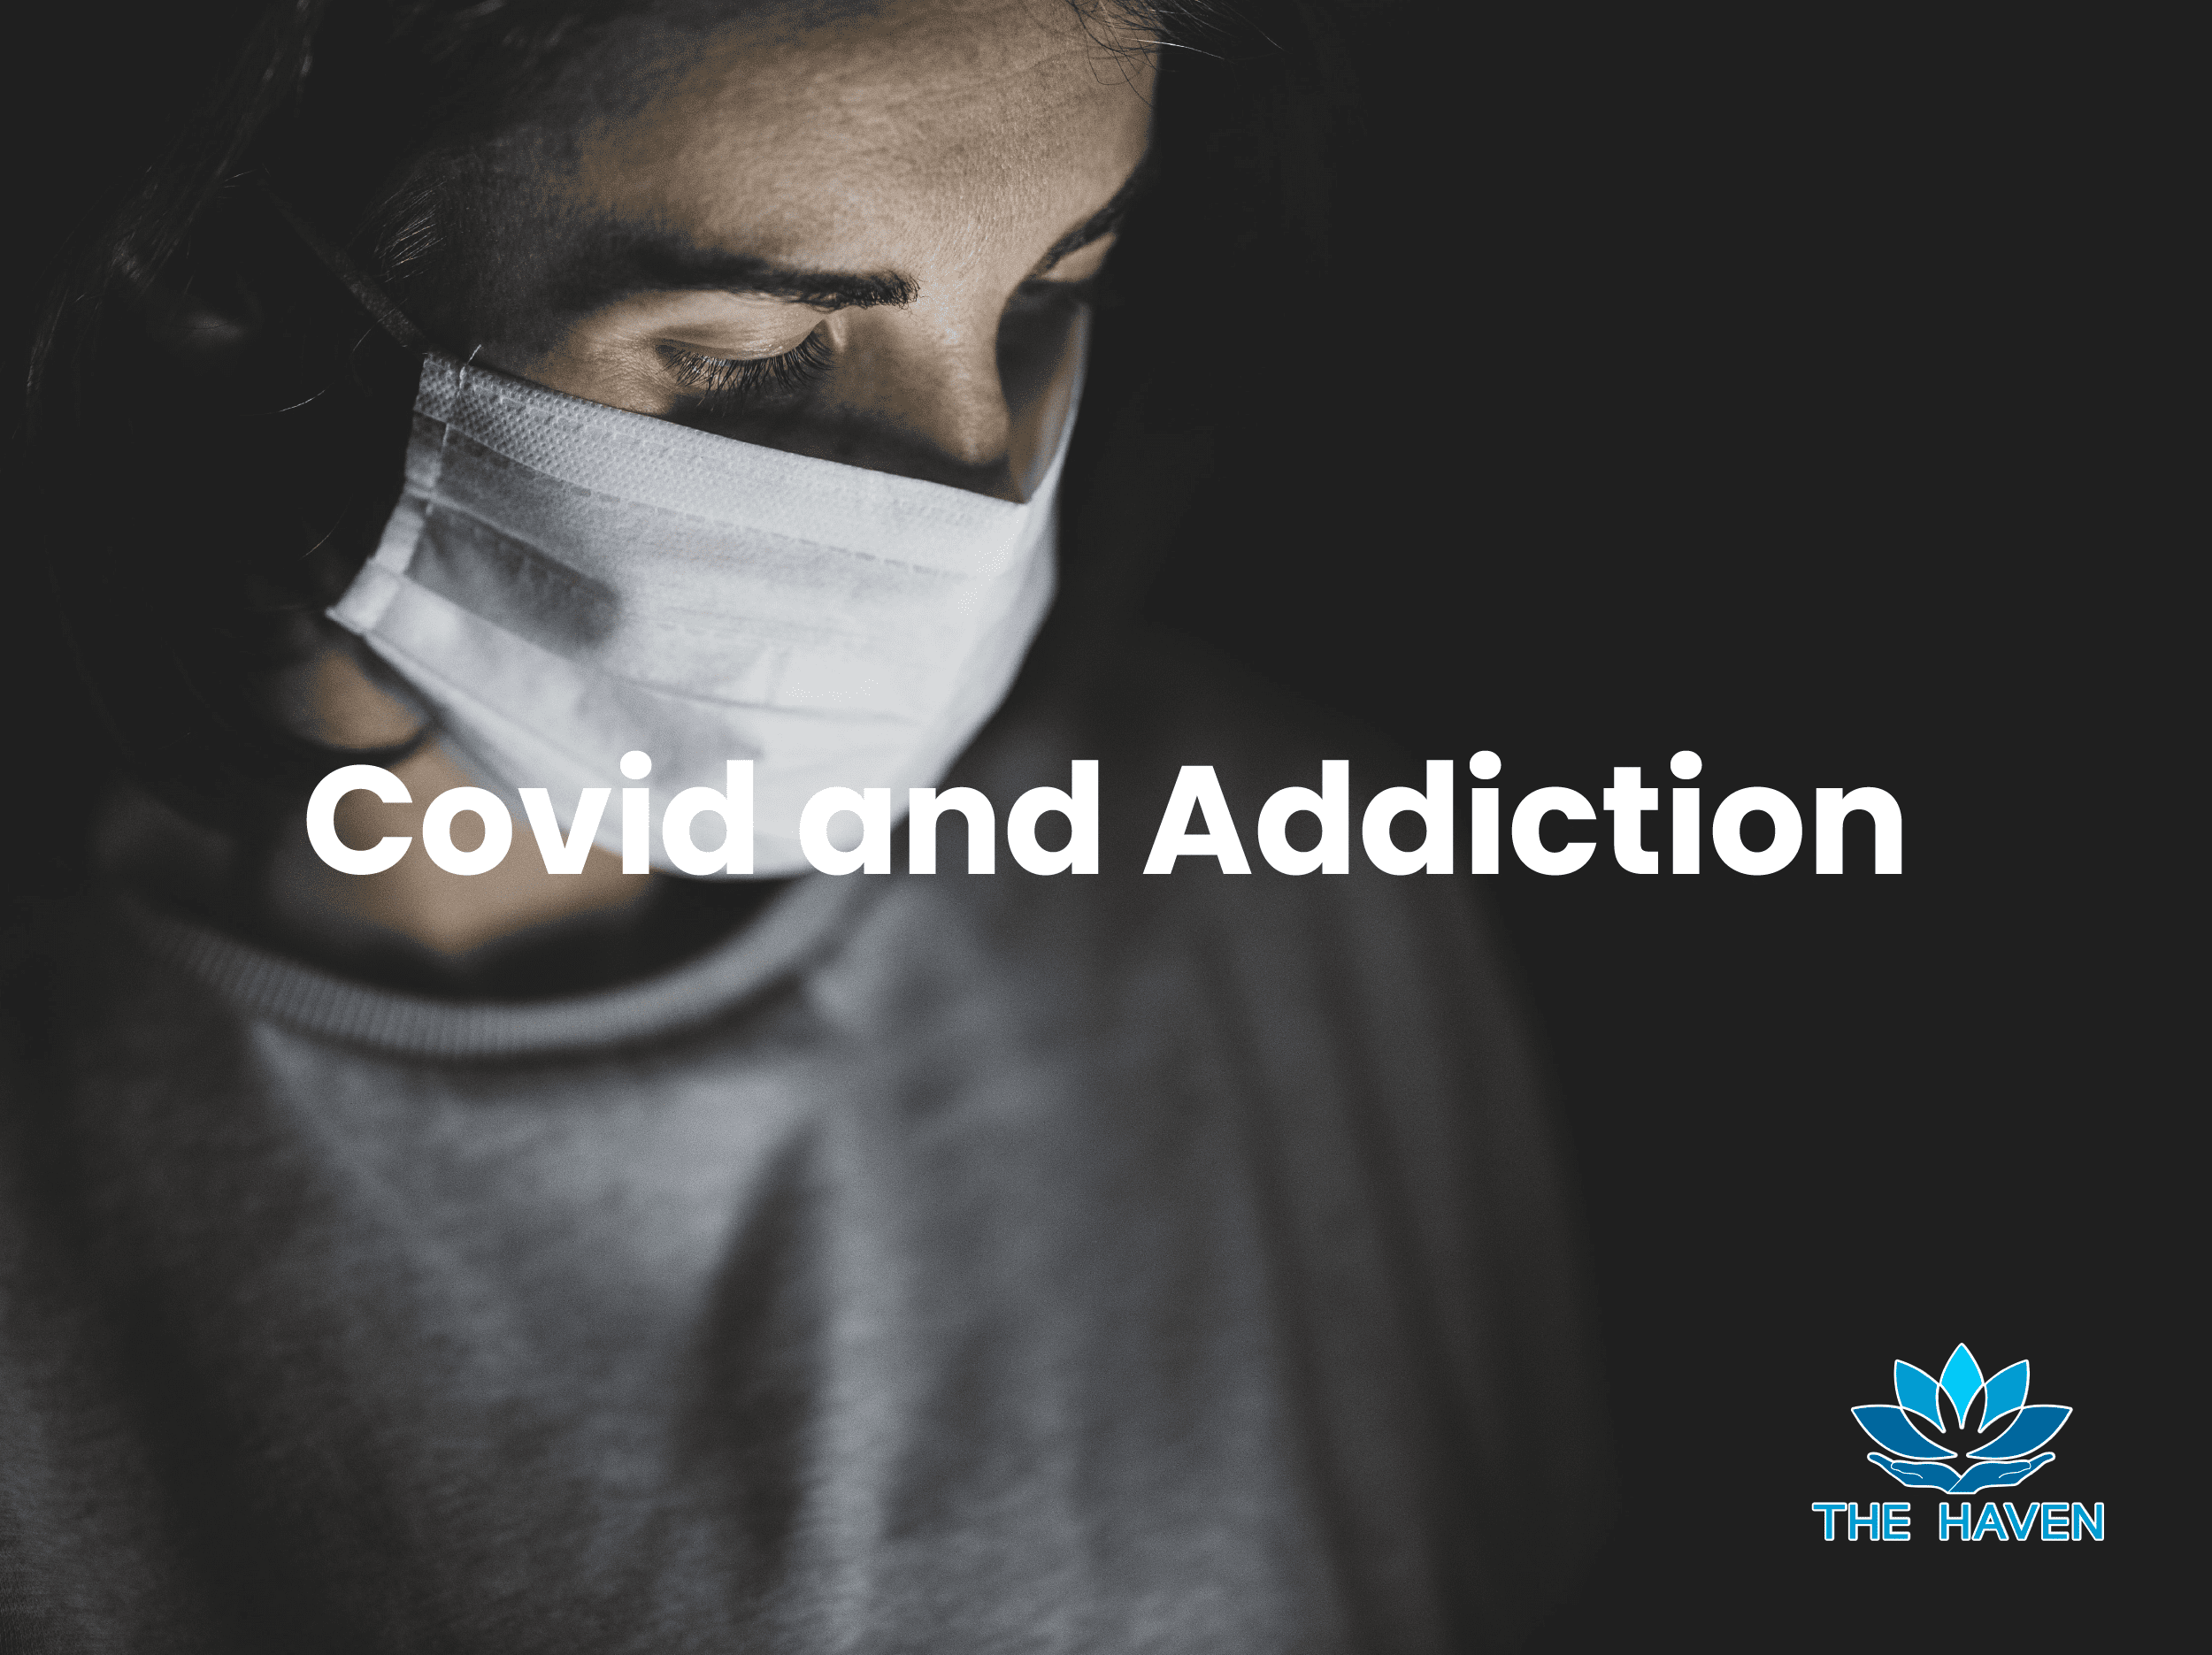 Covid and addiction detox and rehab